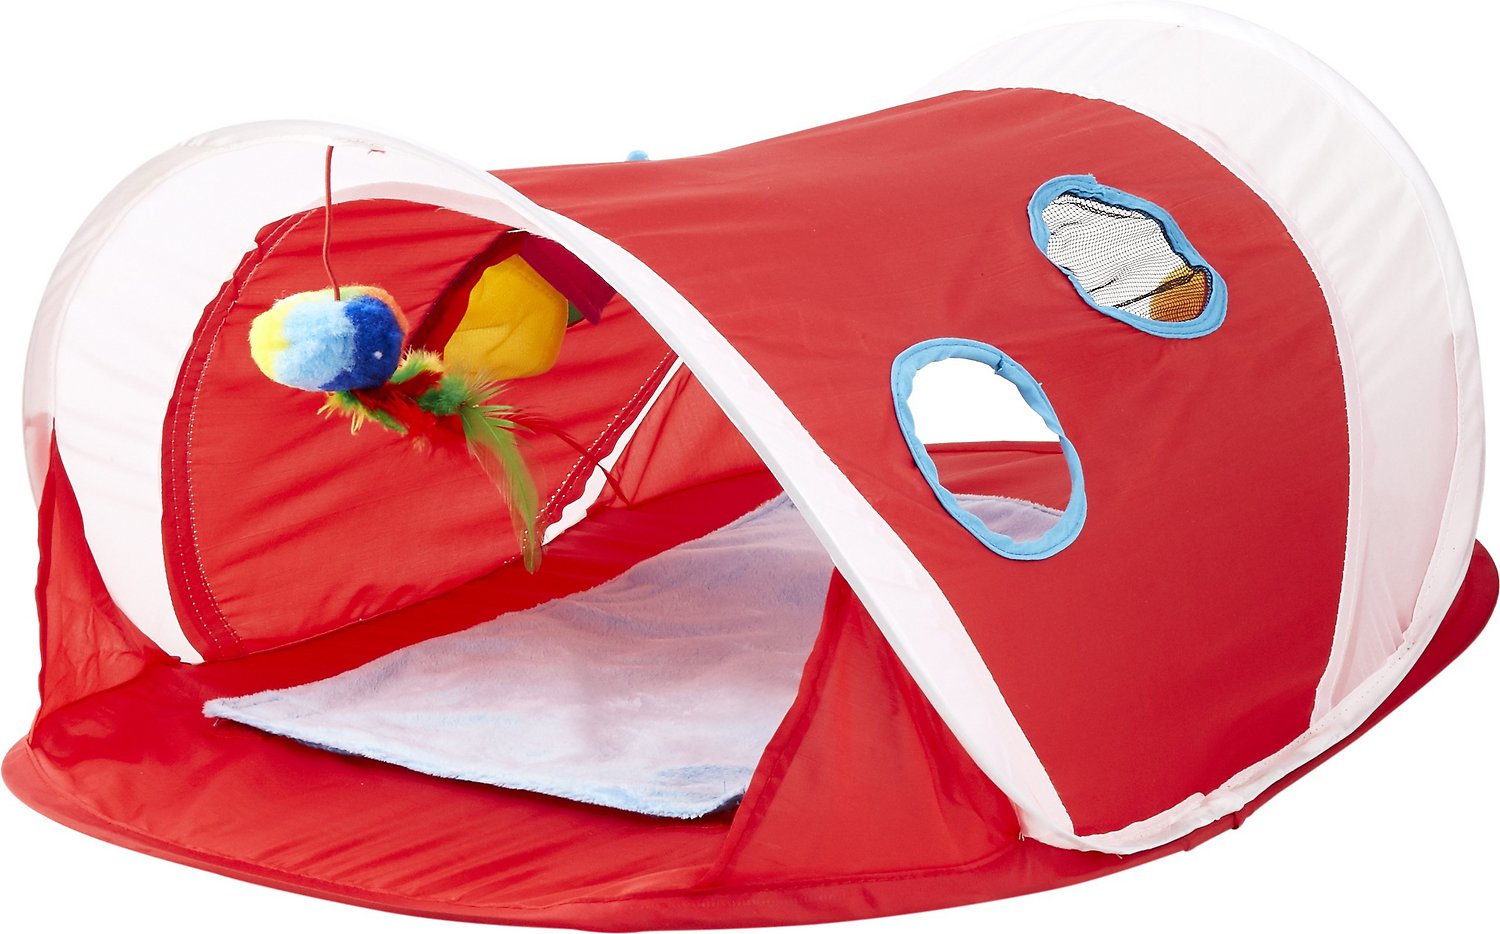 Hartz Just For Cats Peek & Play Pop-Up Tent